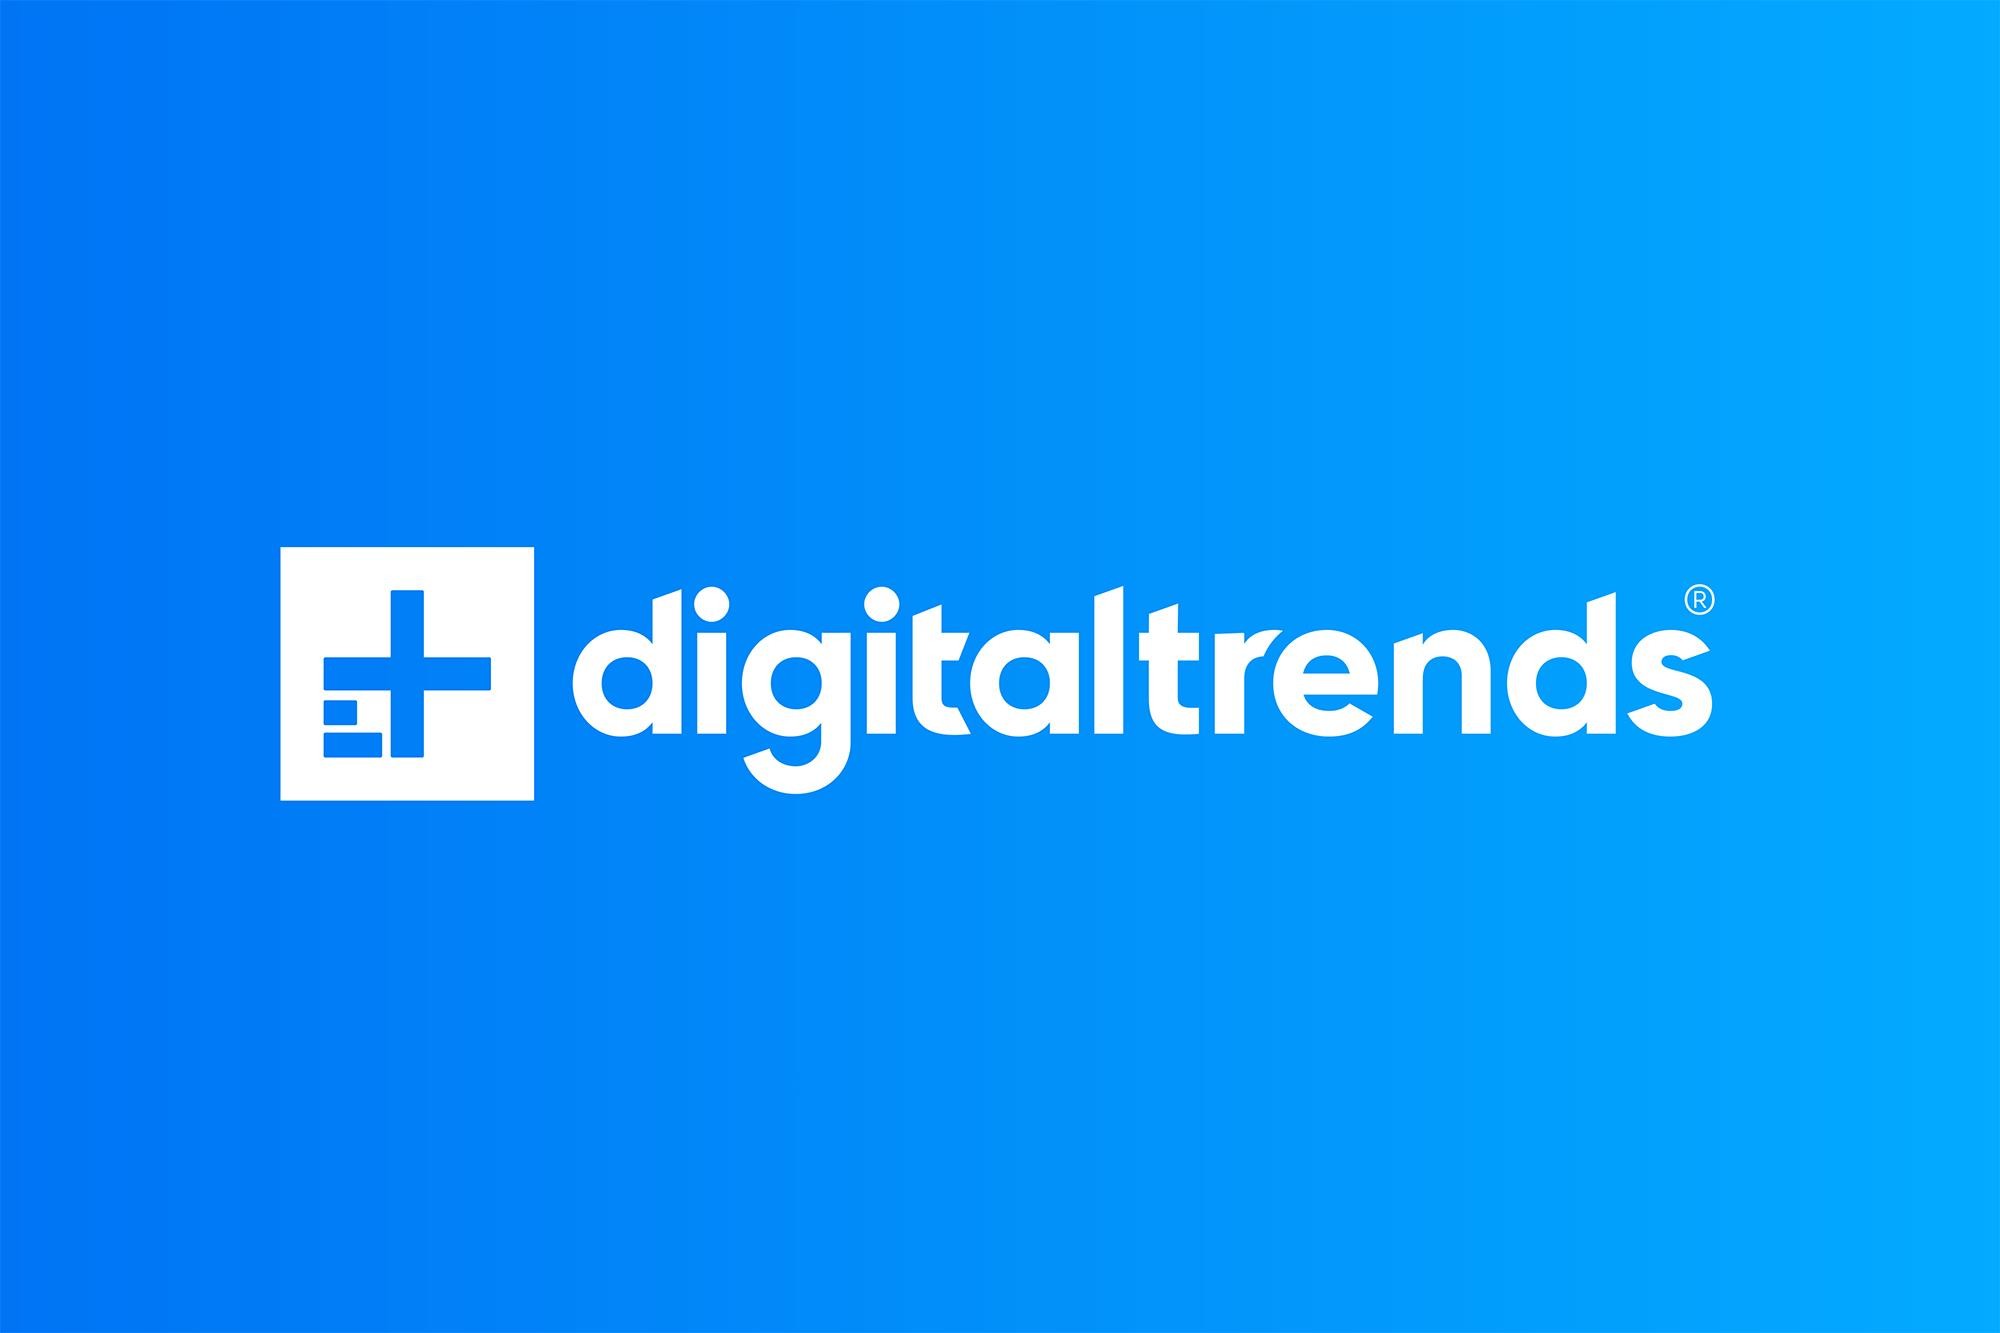 Follow reviews |  Digital trends